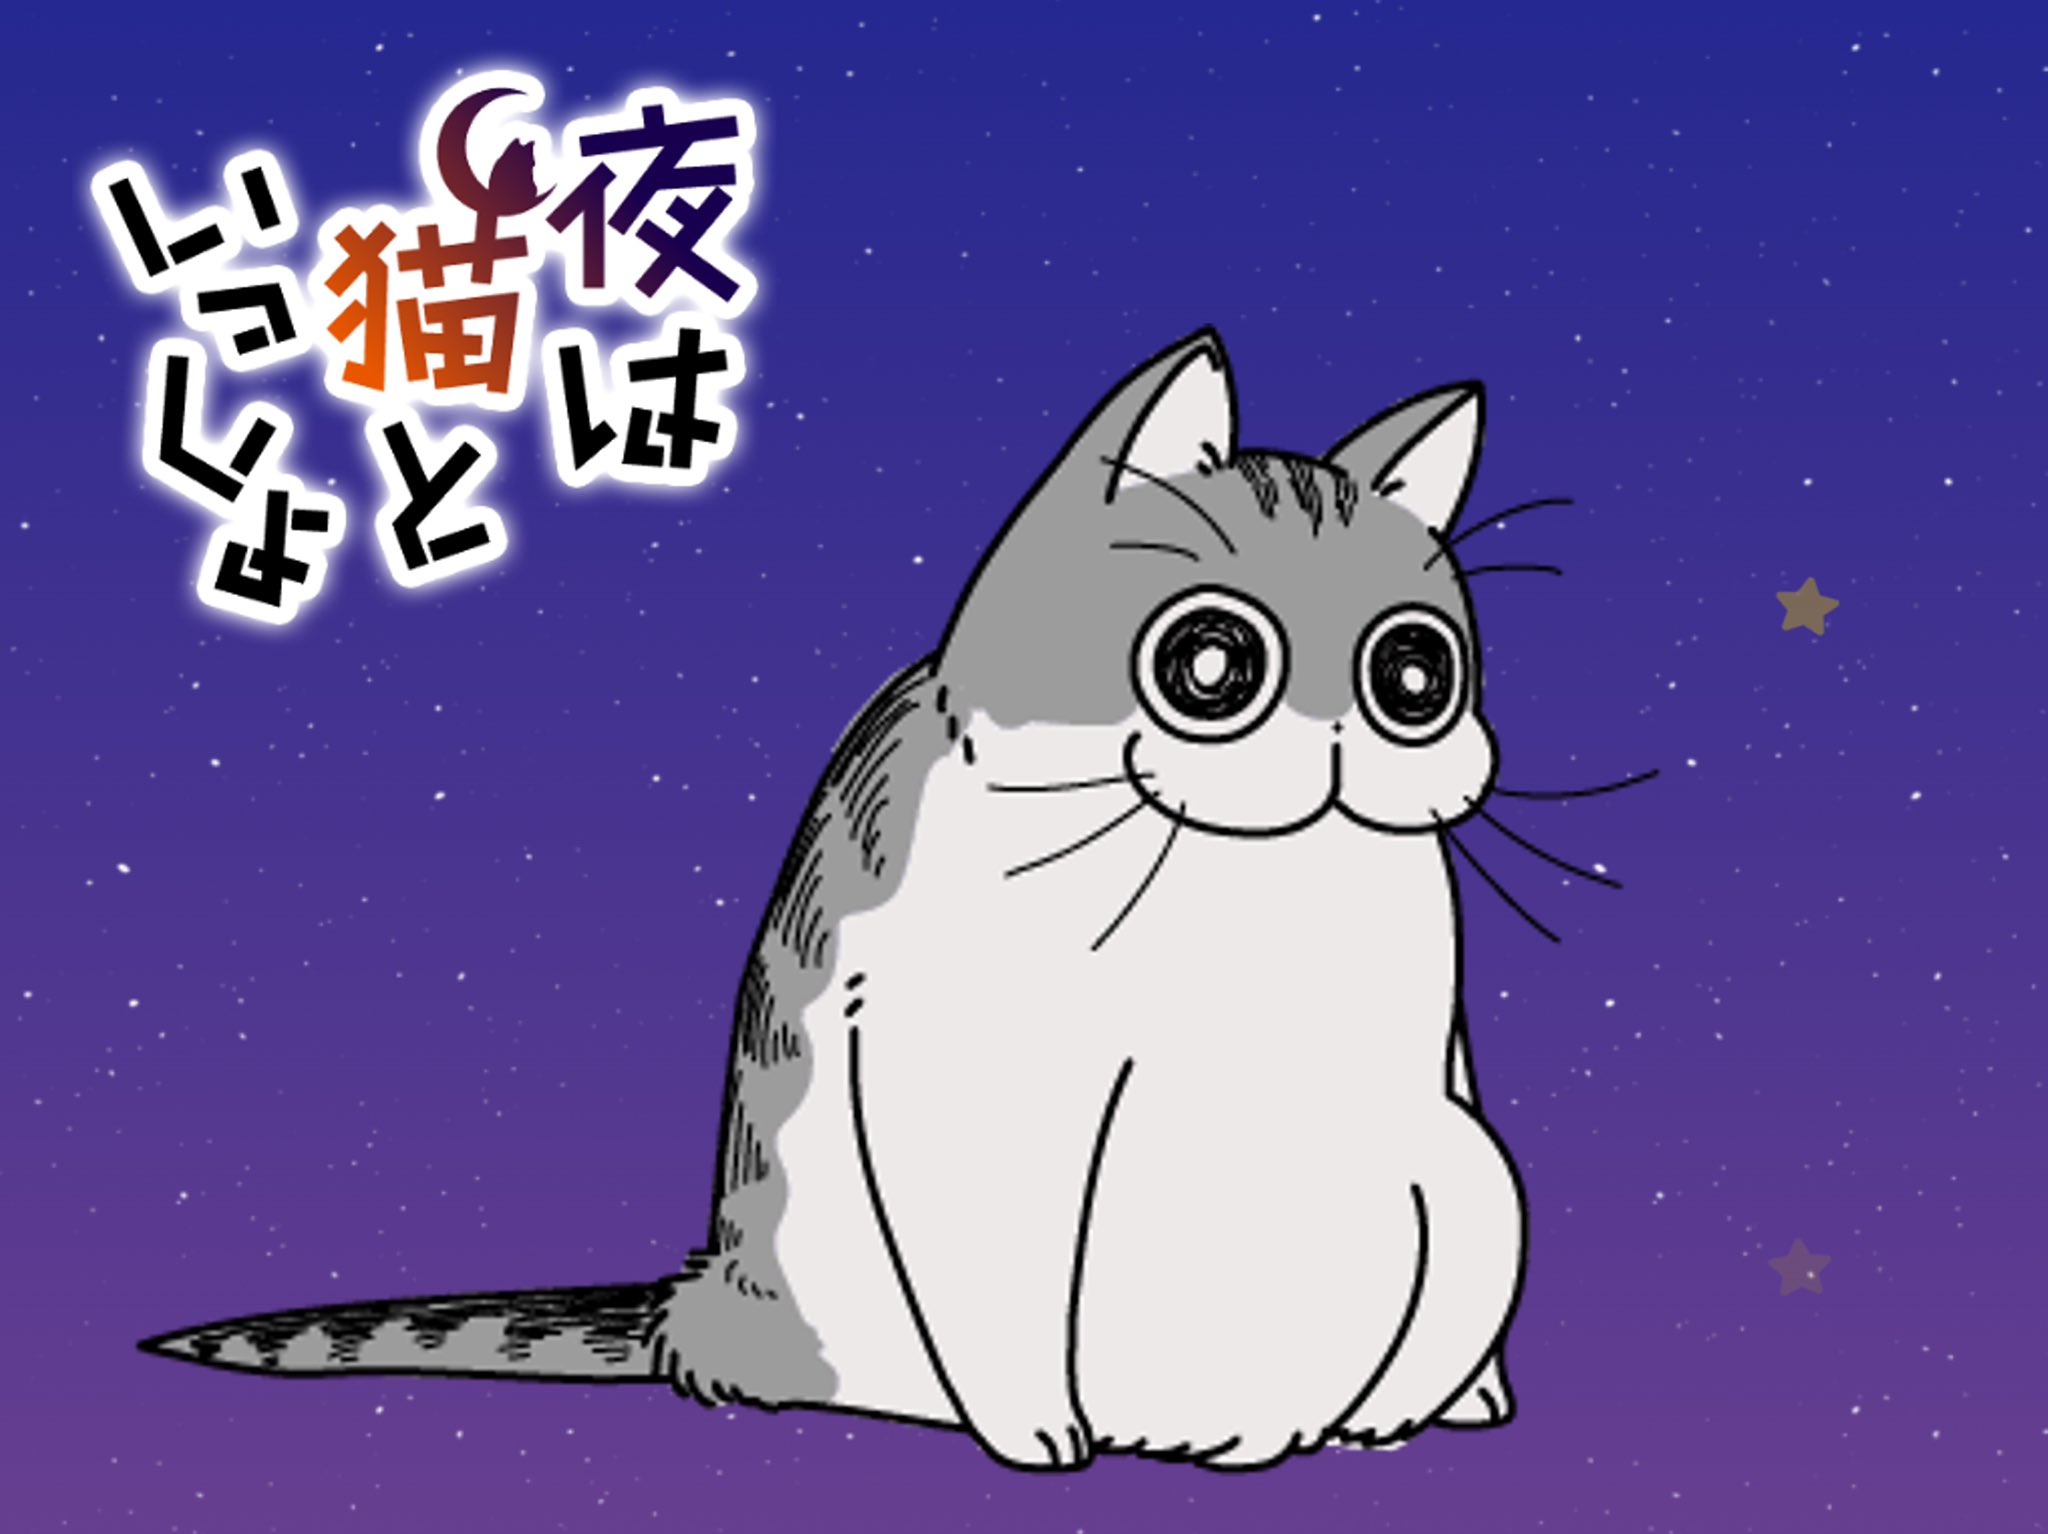 Poster for Nights with a Cat (Yoru wa Neko to Issho)